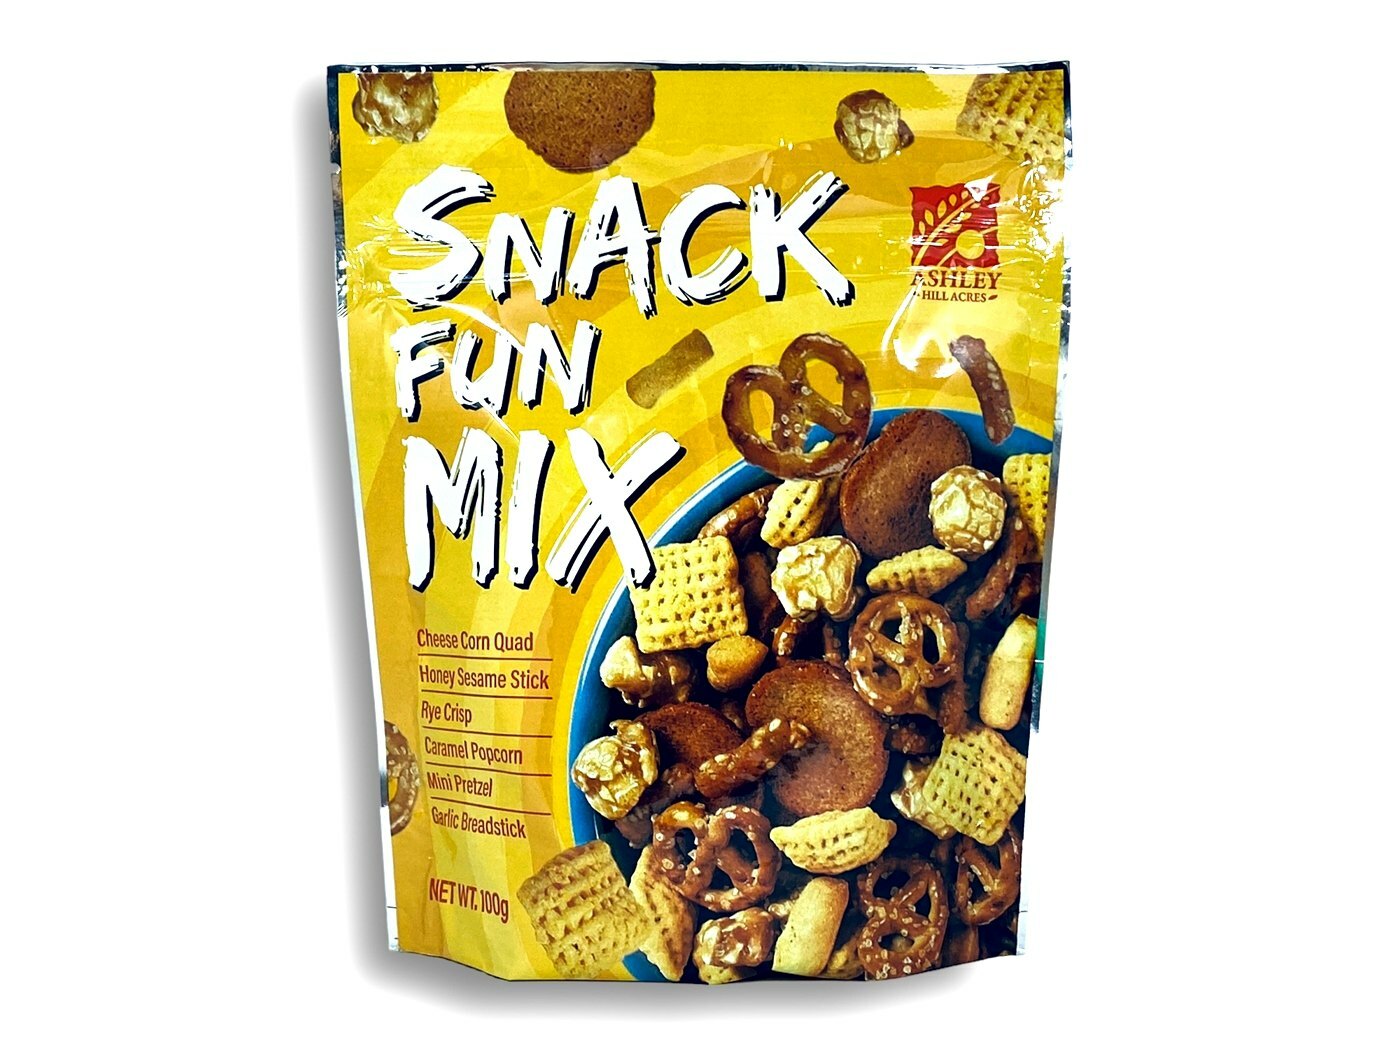 Ashley Hills Snack Fan Mix